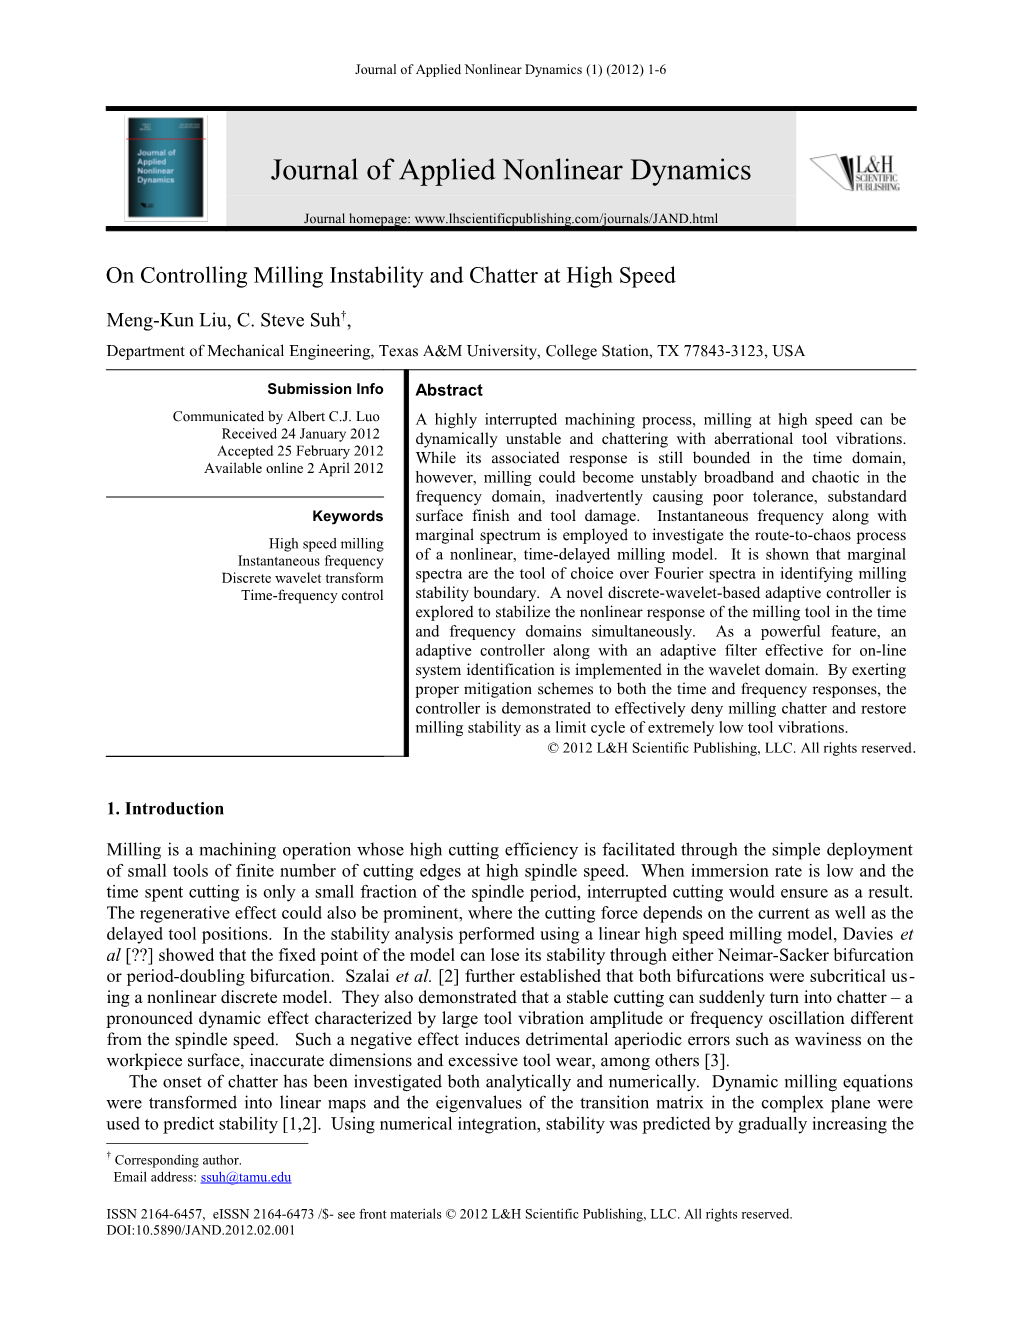 M.-K. Liu, C.S. Suh/Journal of Applied Nonlinear Dynamics 1(1) (2012) 1-6